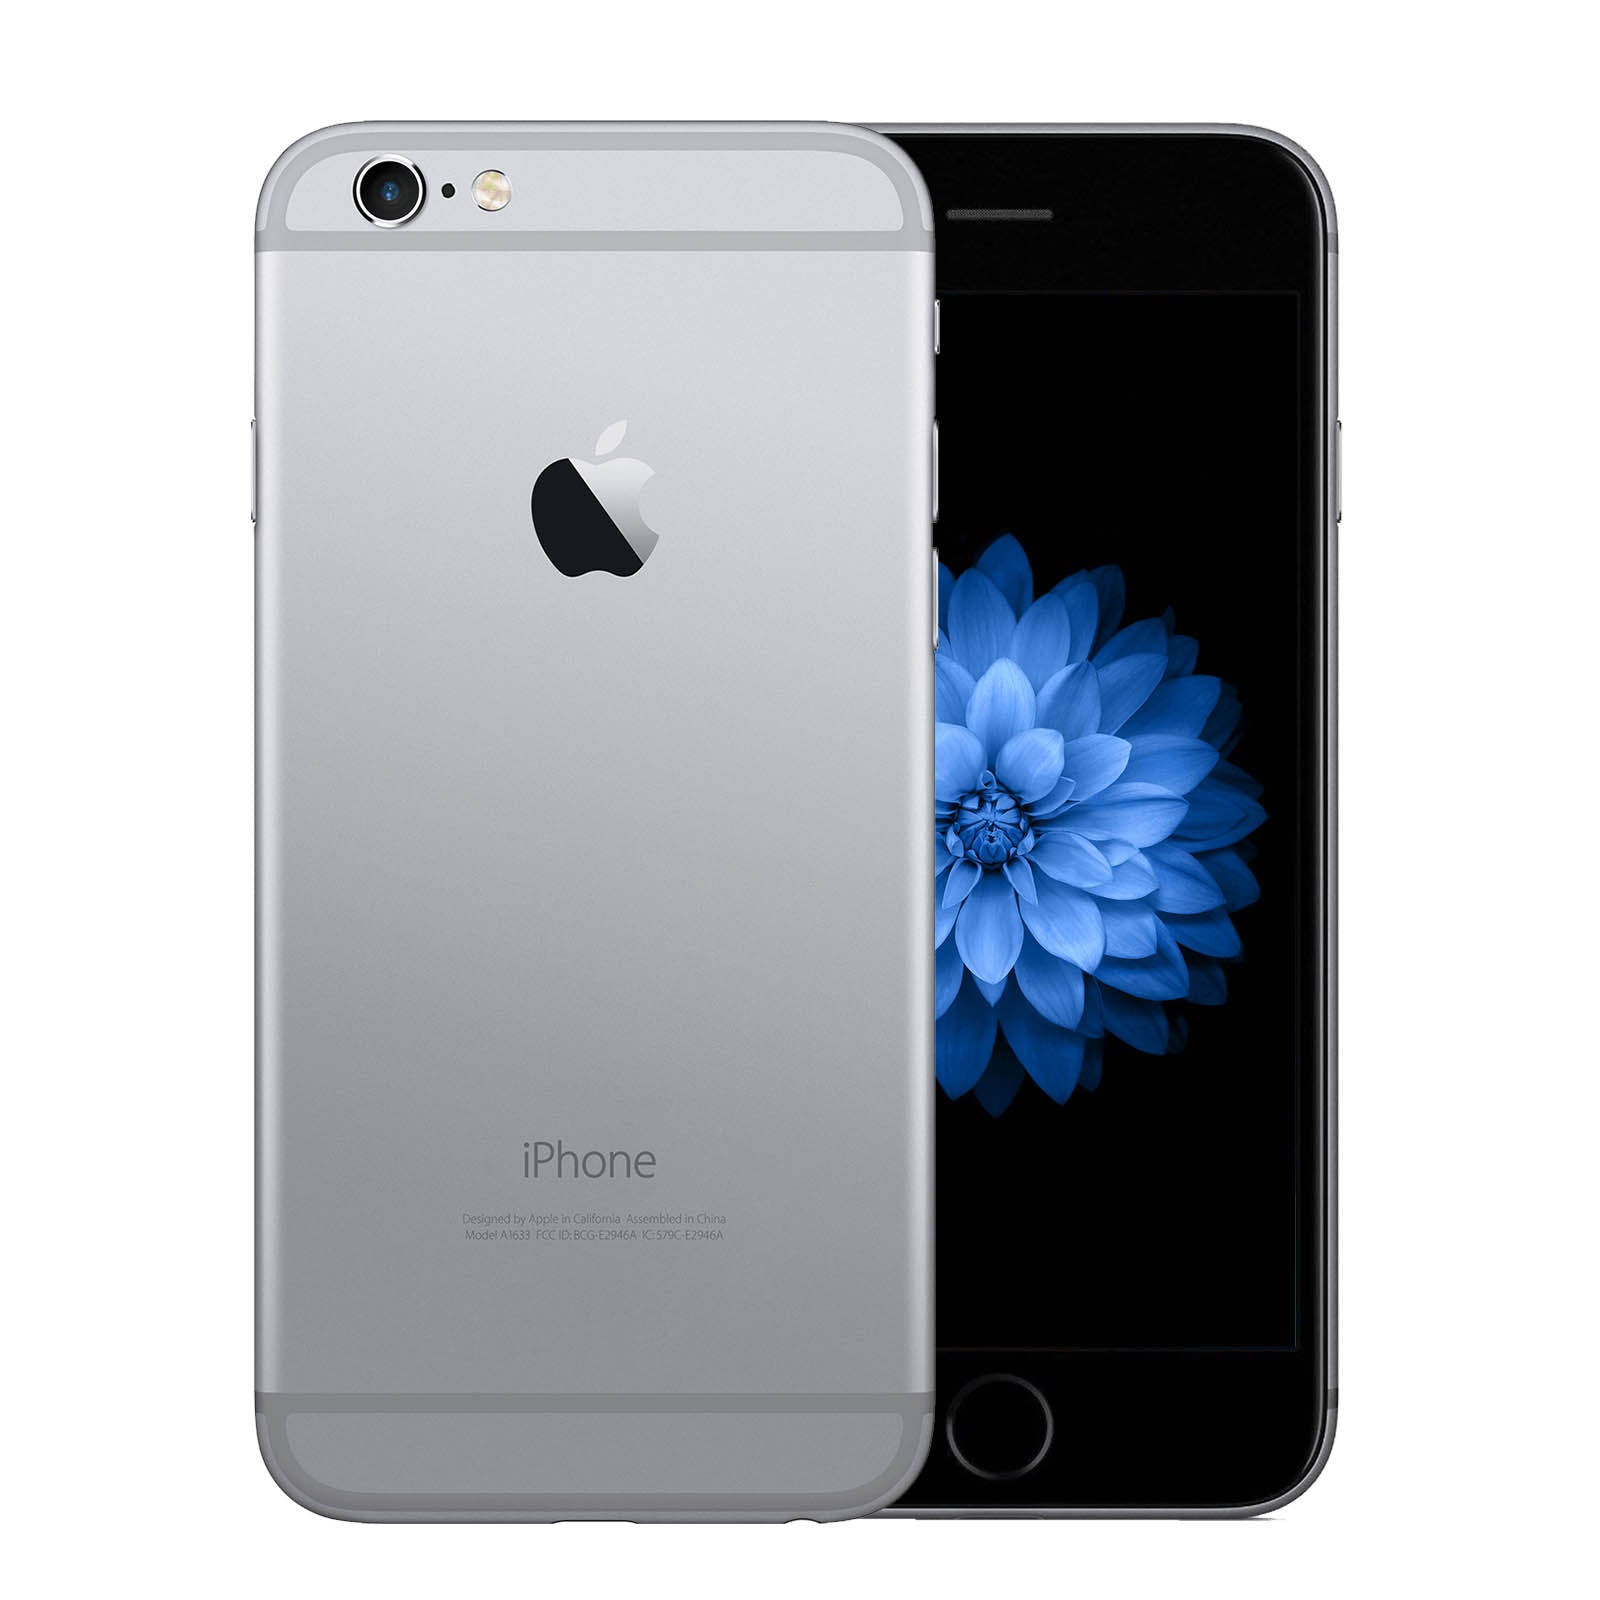 Apple iPhone 6 16GB Space Grey Fair - Unlocked